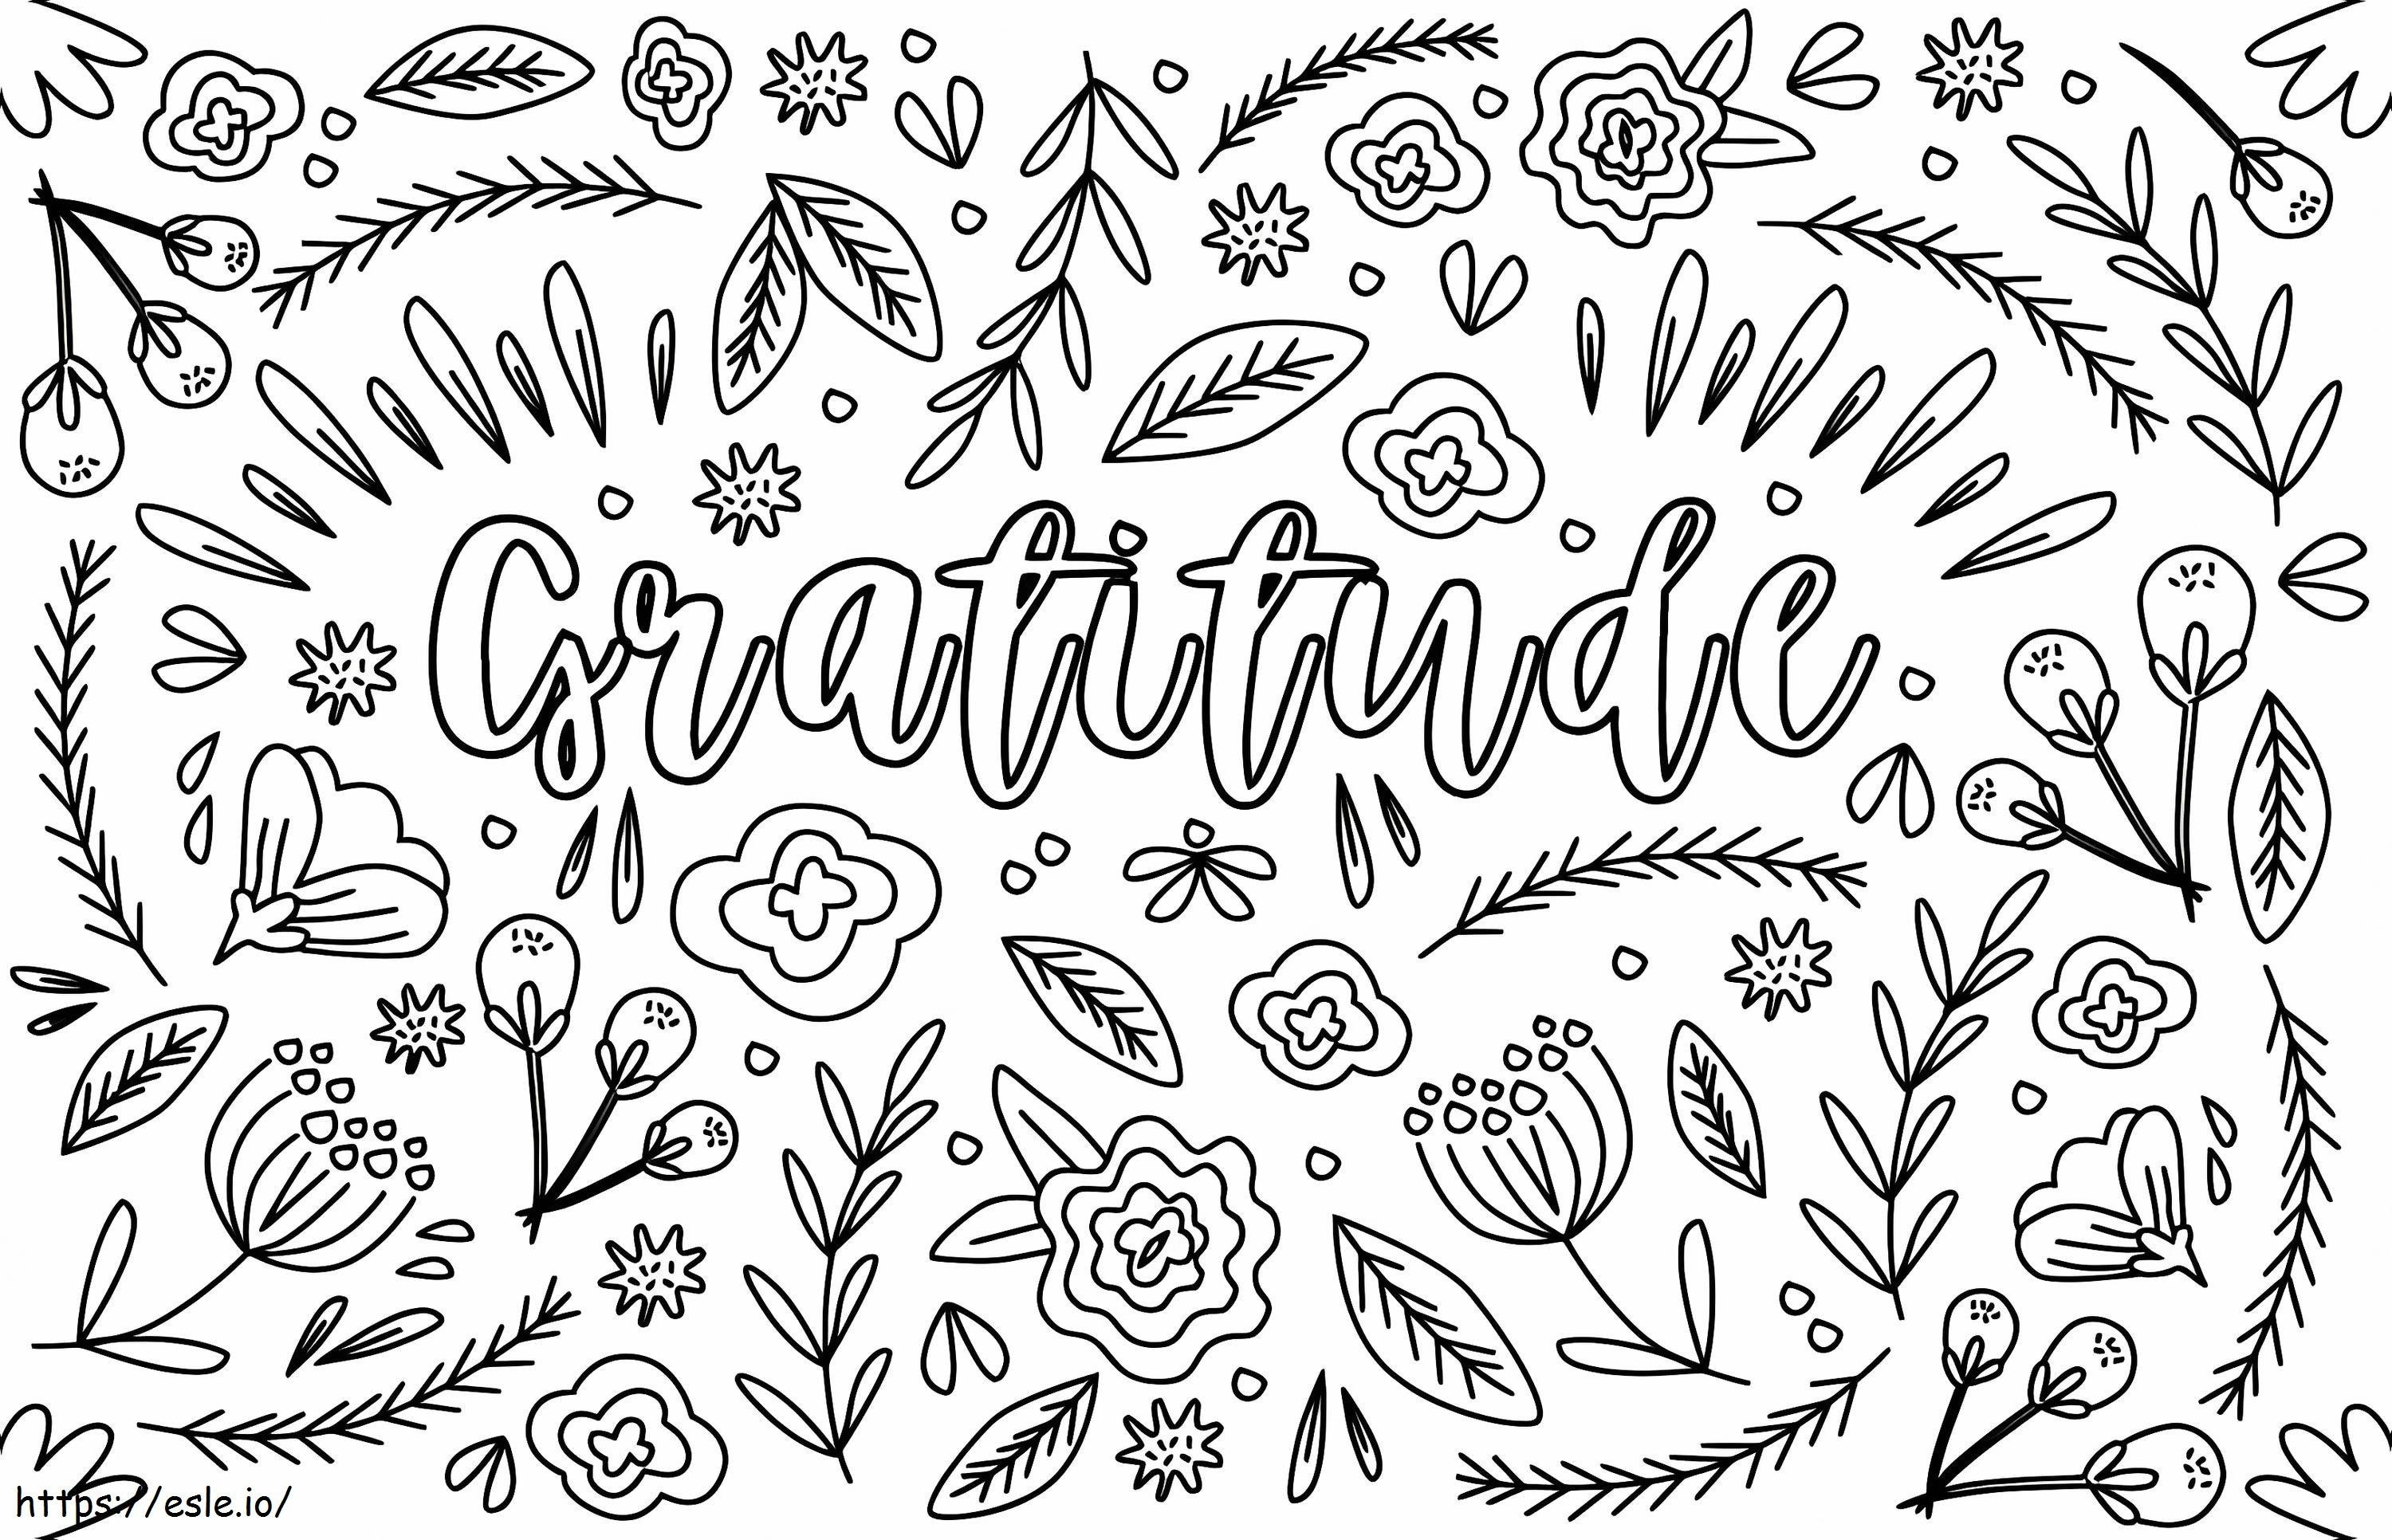 Free Gratitude coloring page